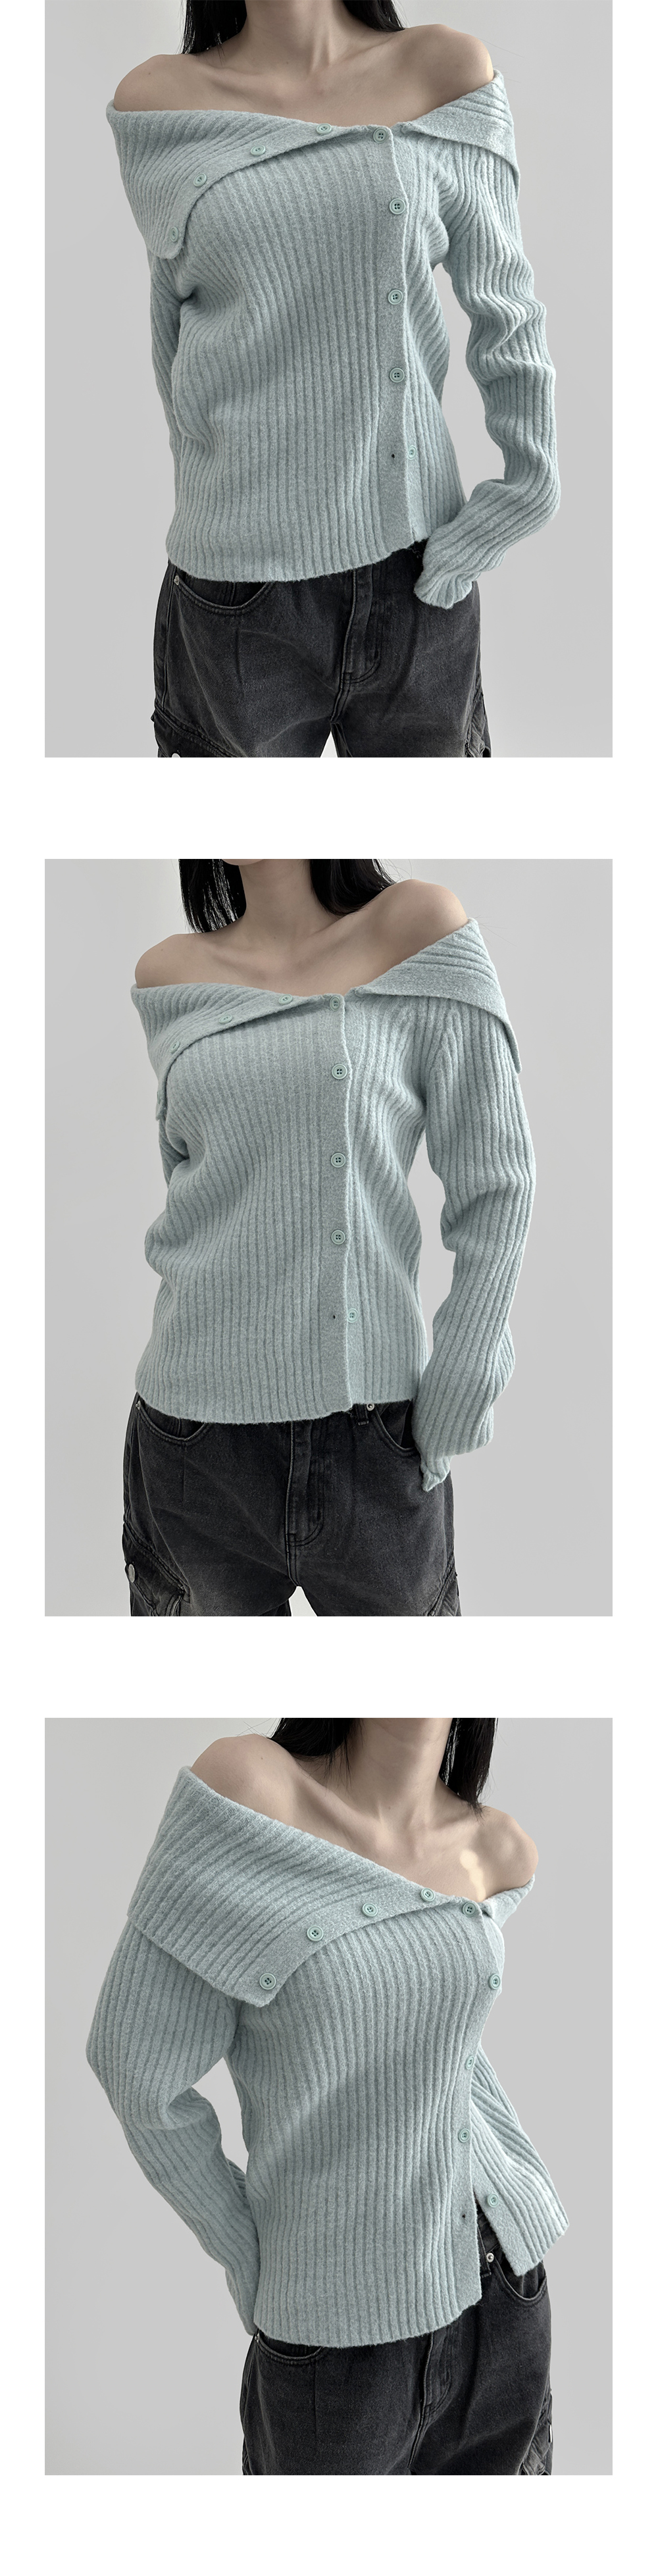 suspenders skirt/pants model image-S1L12